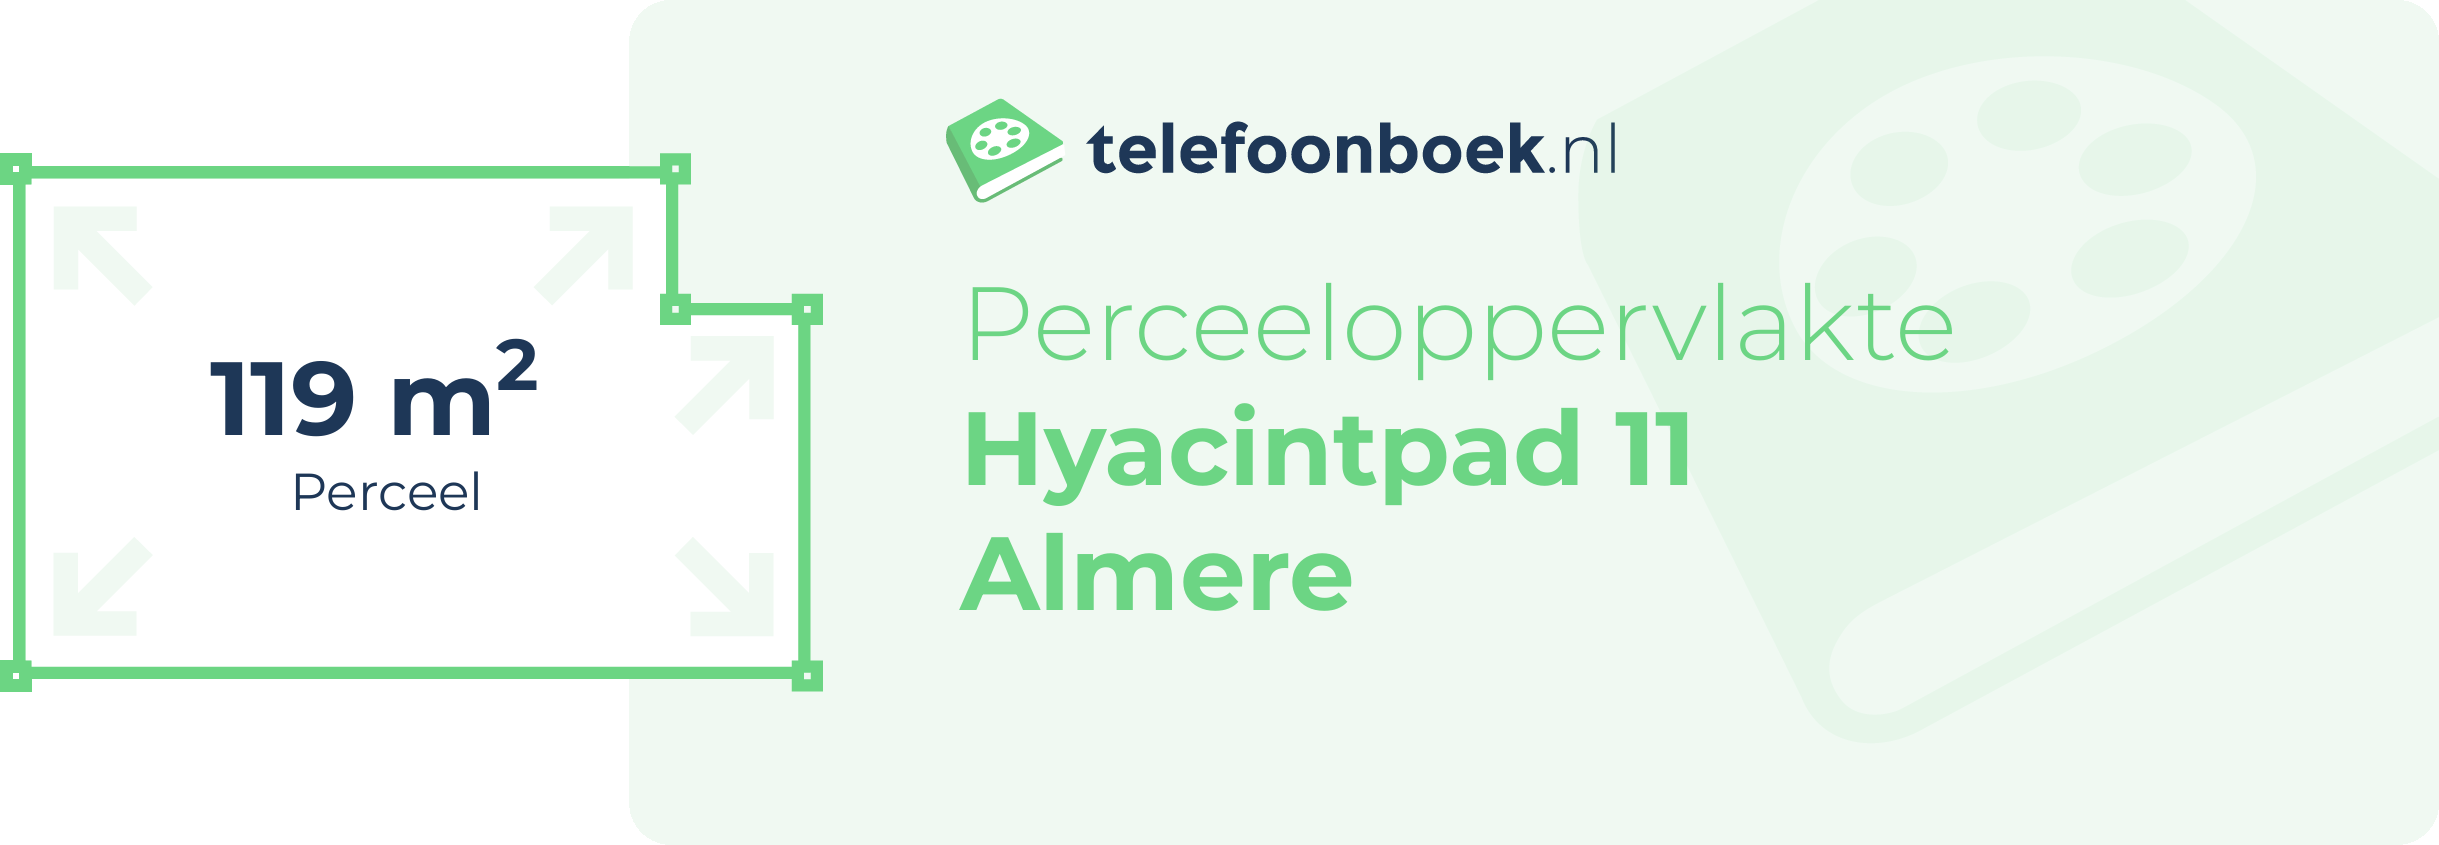 Perceeloppervlakte Hyacintpad 11 Almere